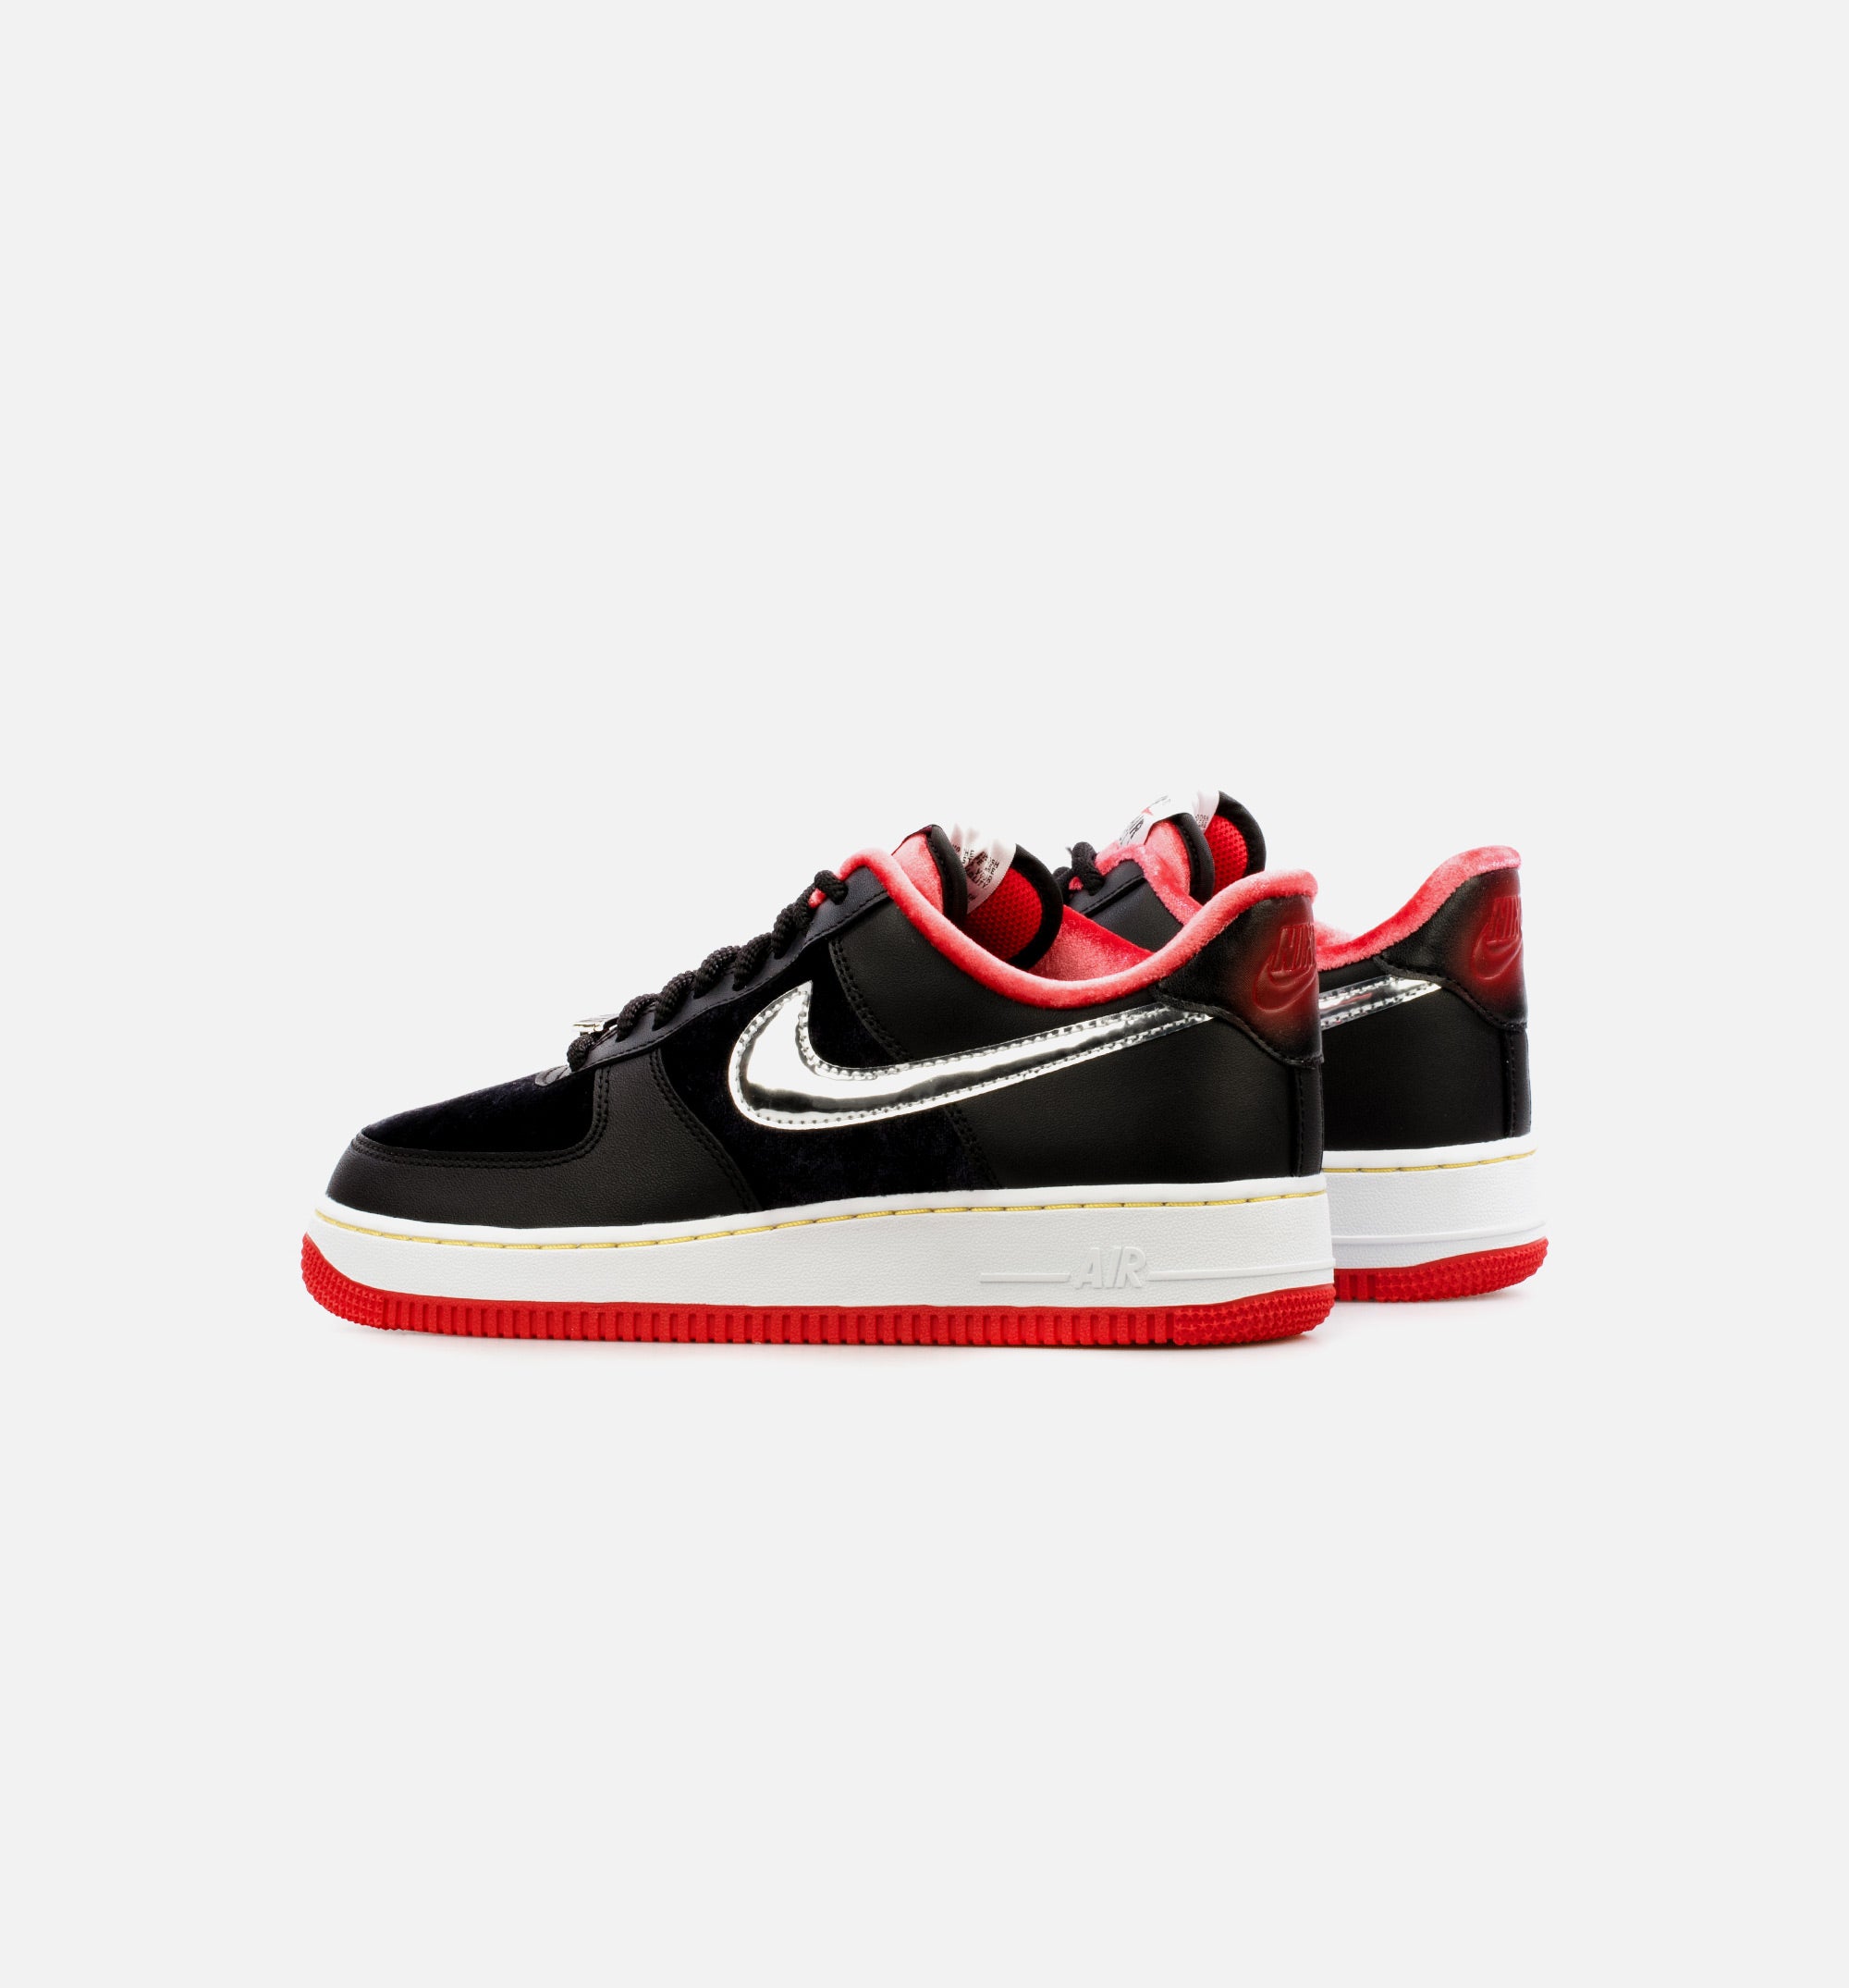 Nike Air Force 1 Low LV8 Red Men's Shoe